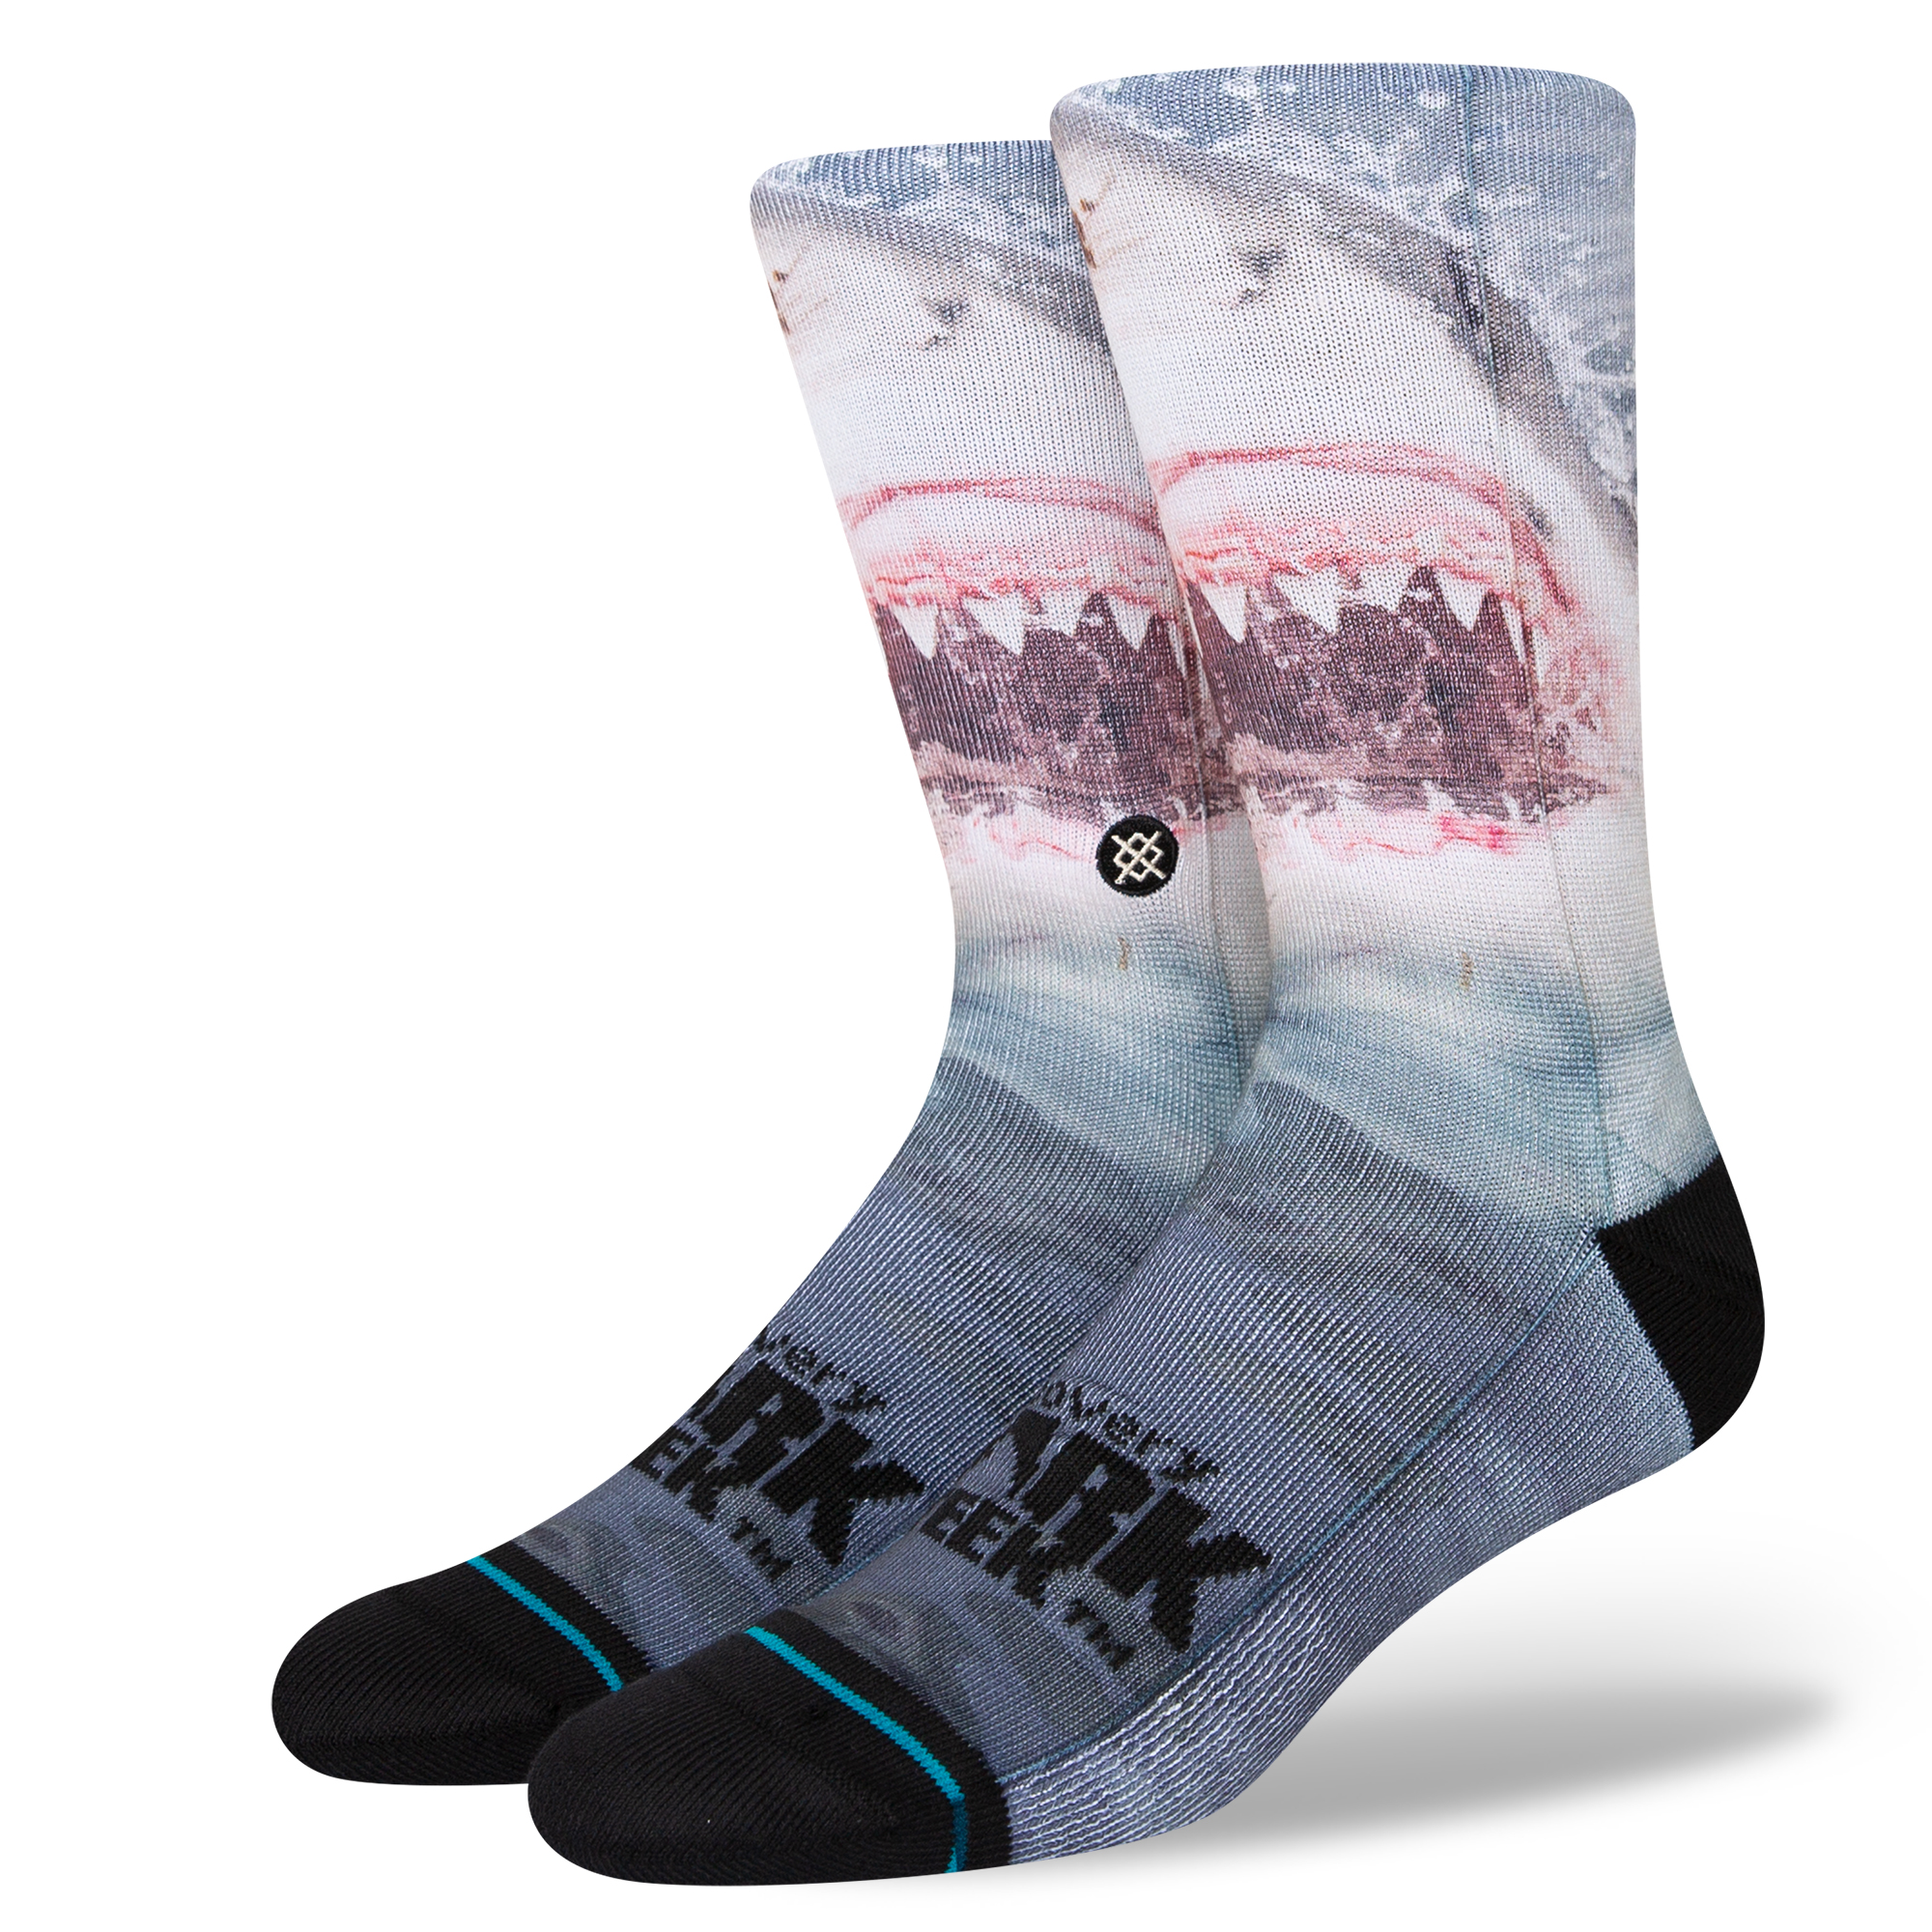 Shark Week Pearly Whites Cotton Crew Socks